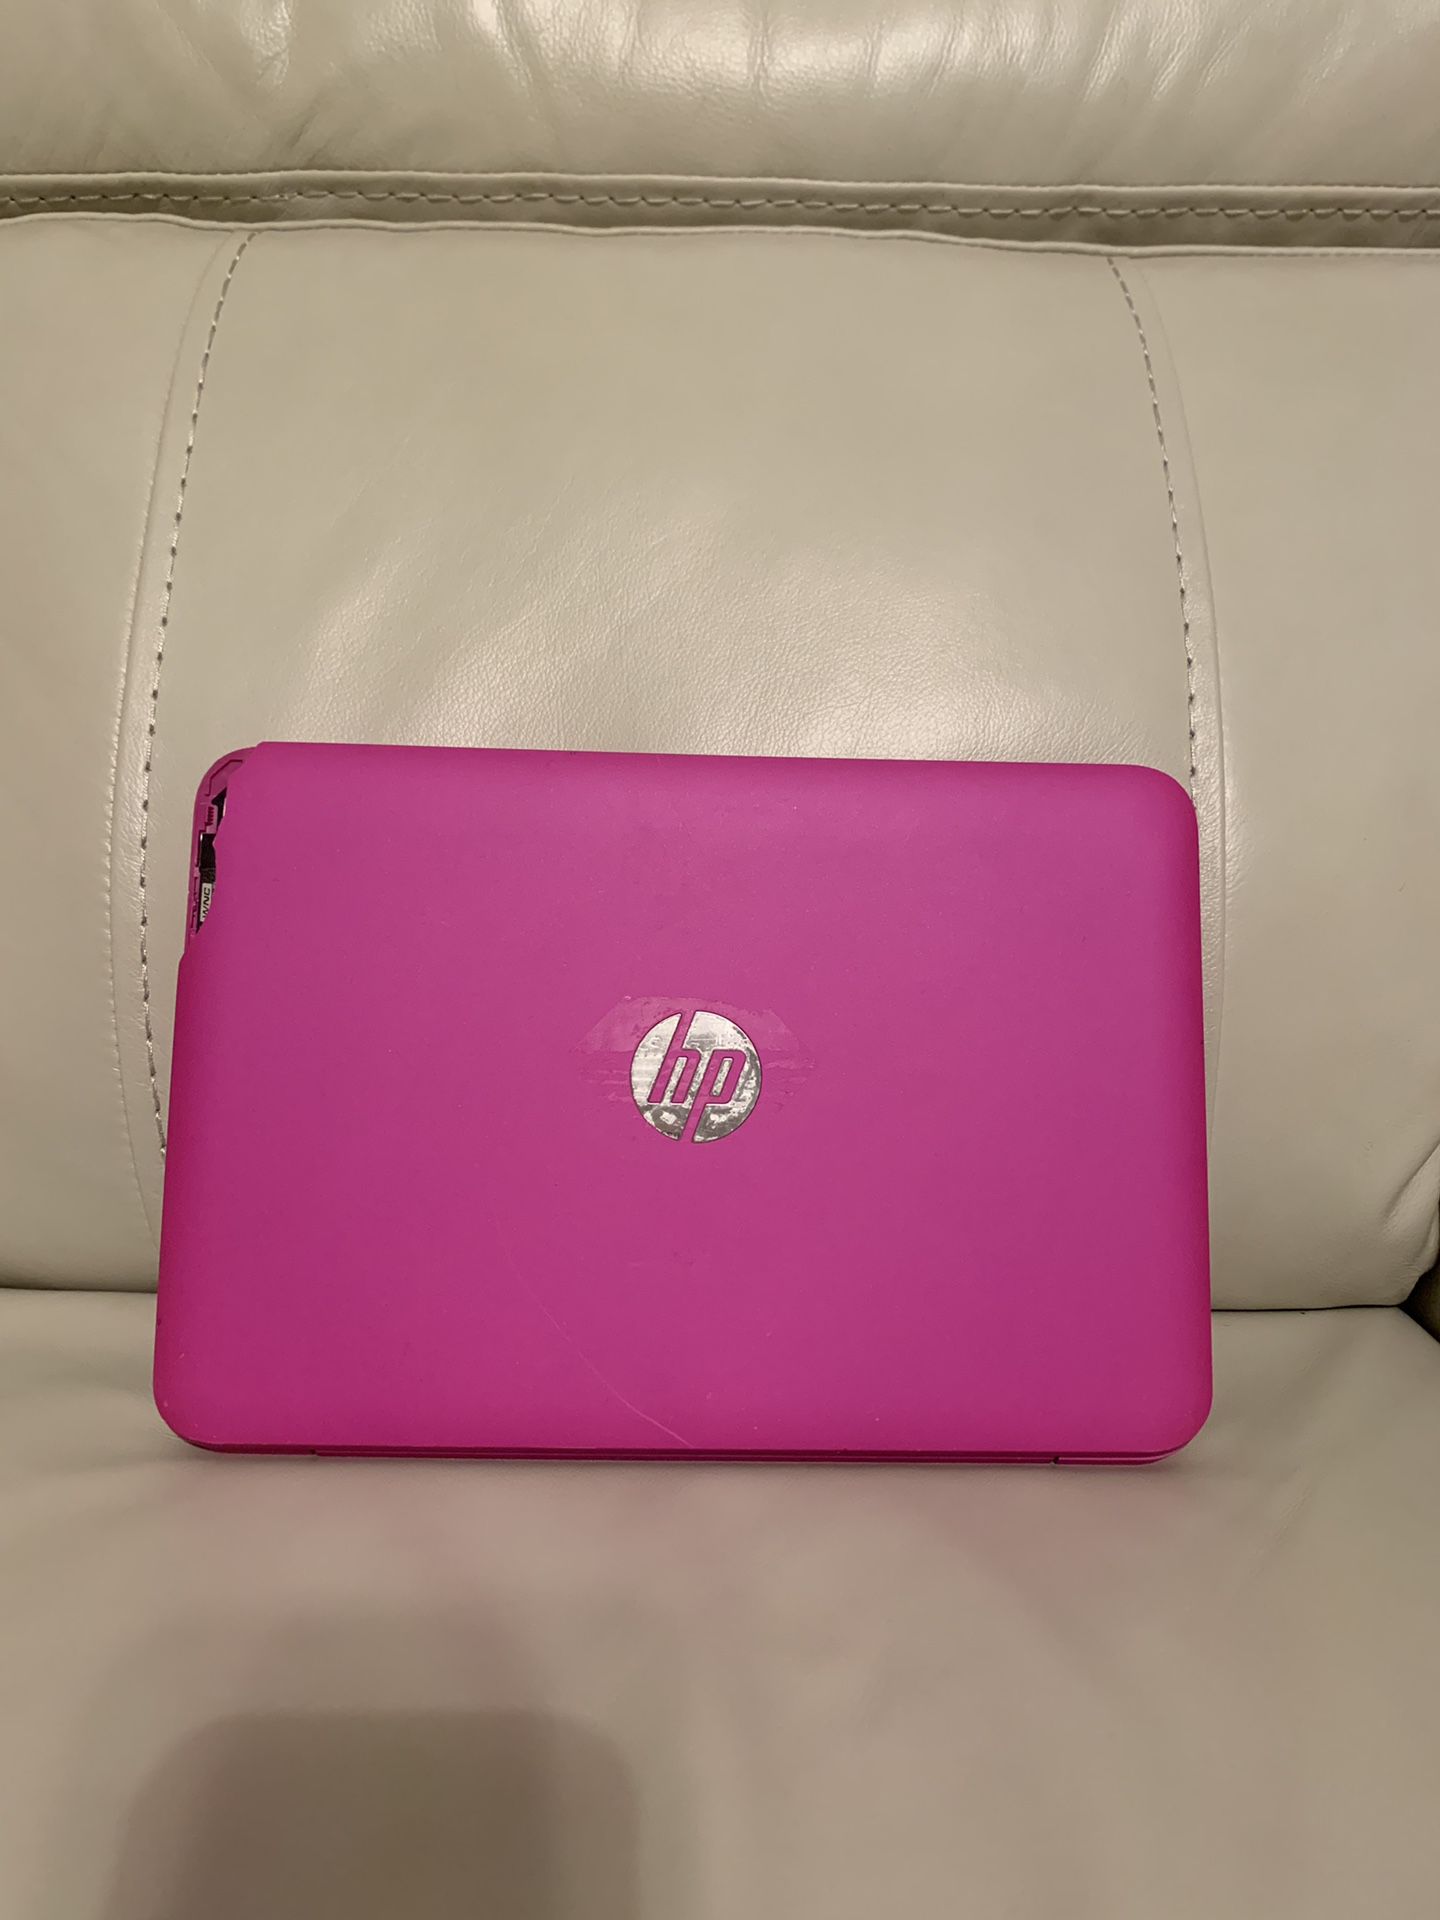 HP Stream Notebook PC 11